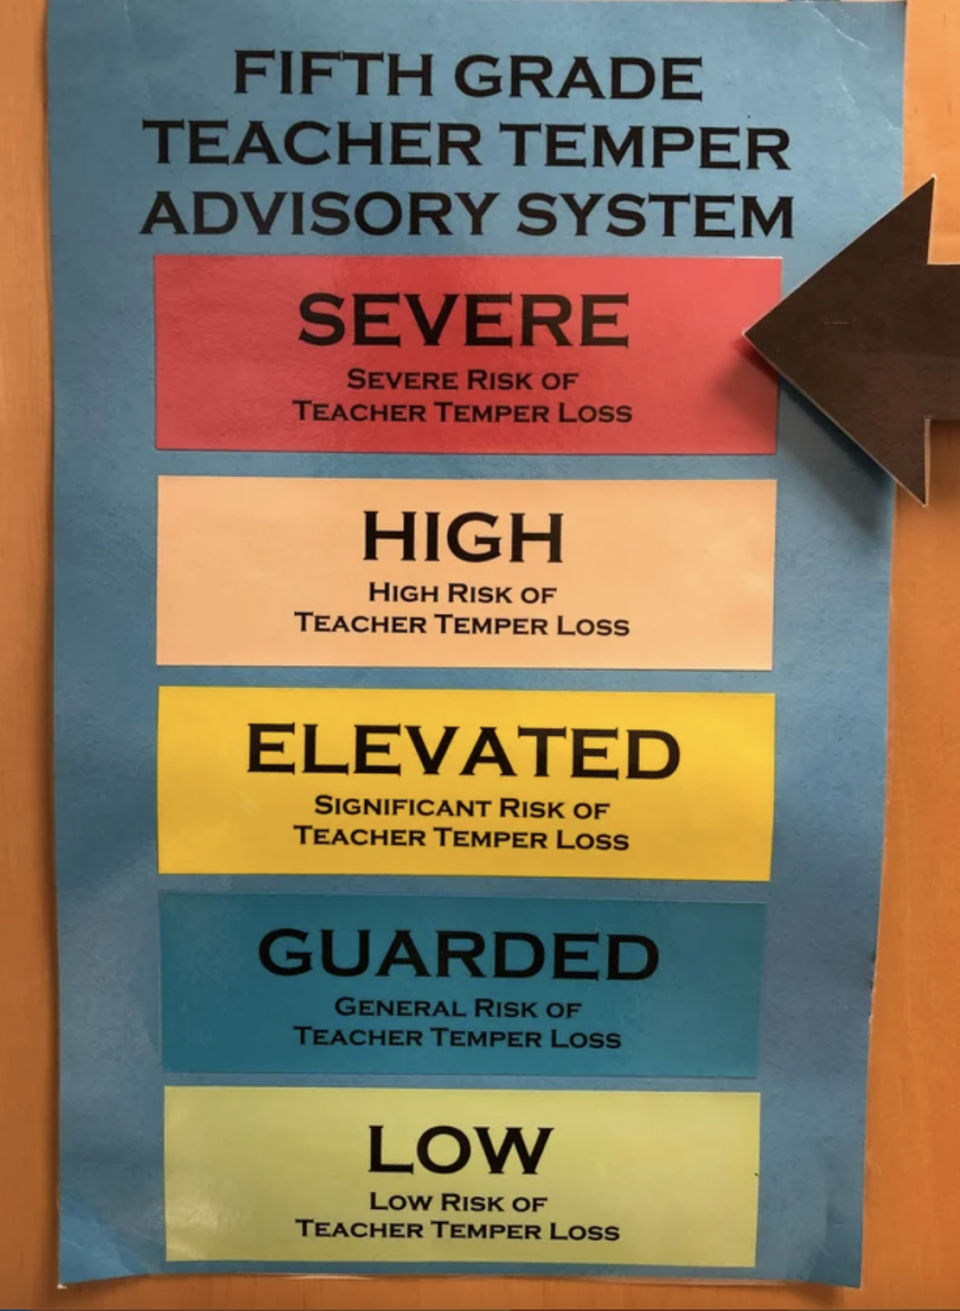 "Fifth Grade Teacher Temper Advisory System"